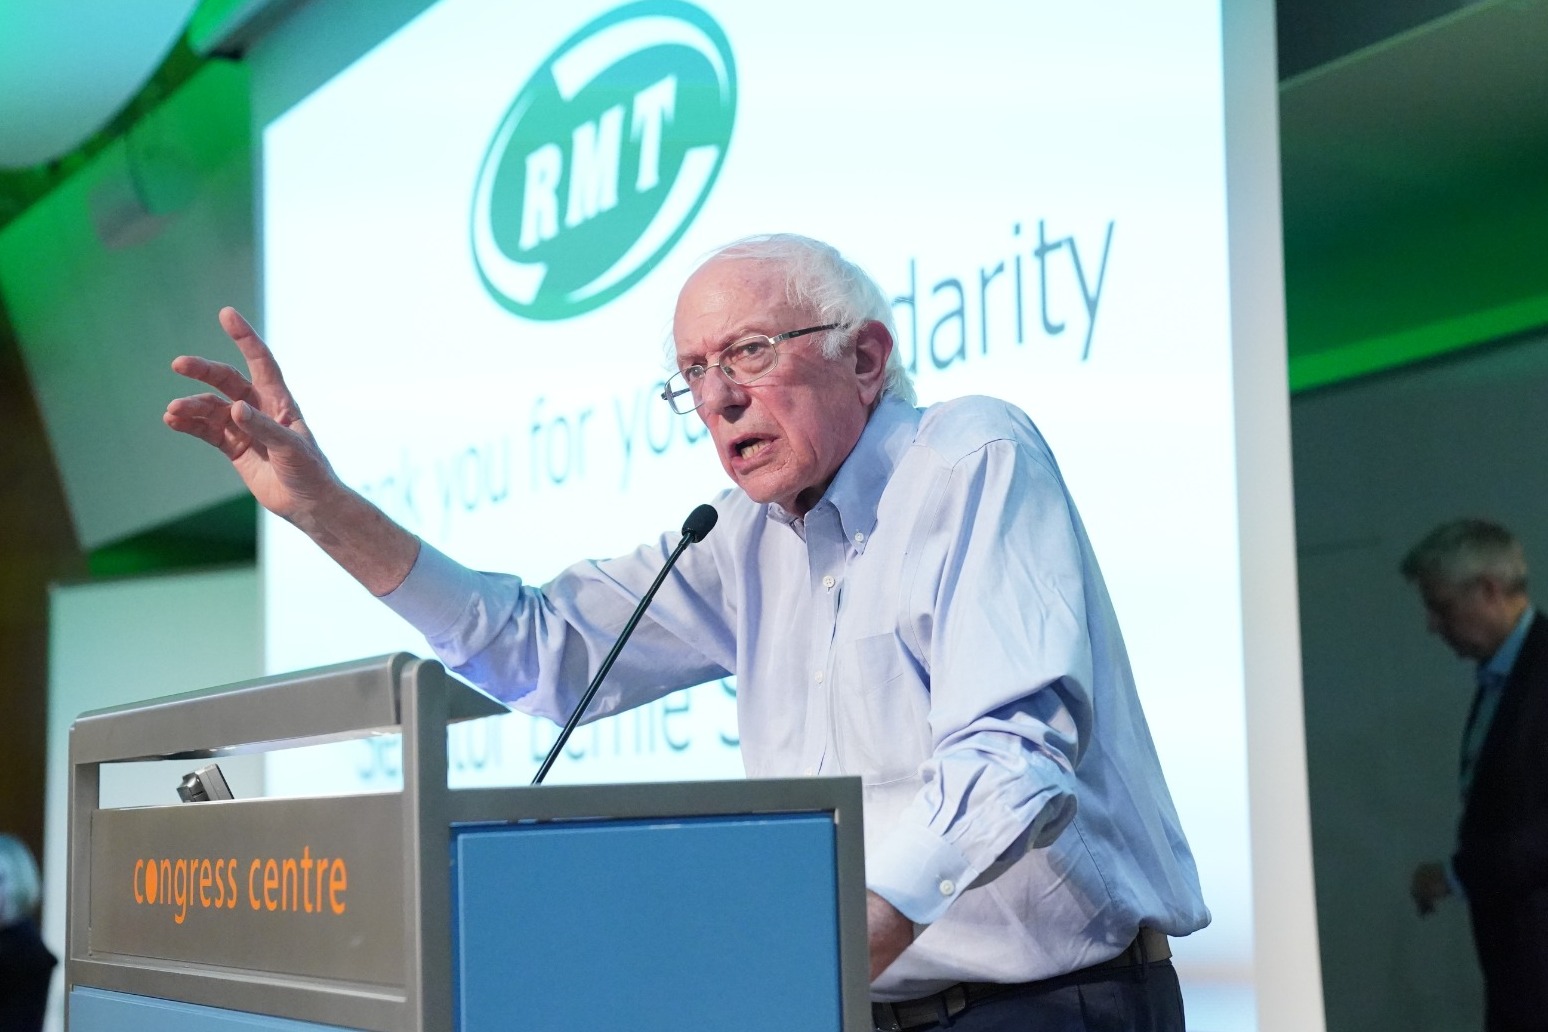 Bernie Sanders backs RMT and striking UK workers in fight against ‘oligarchs’ 